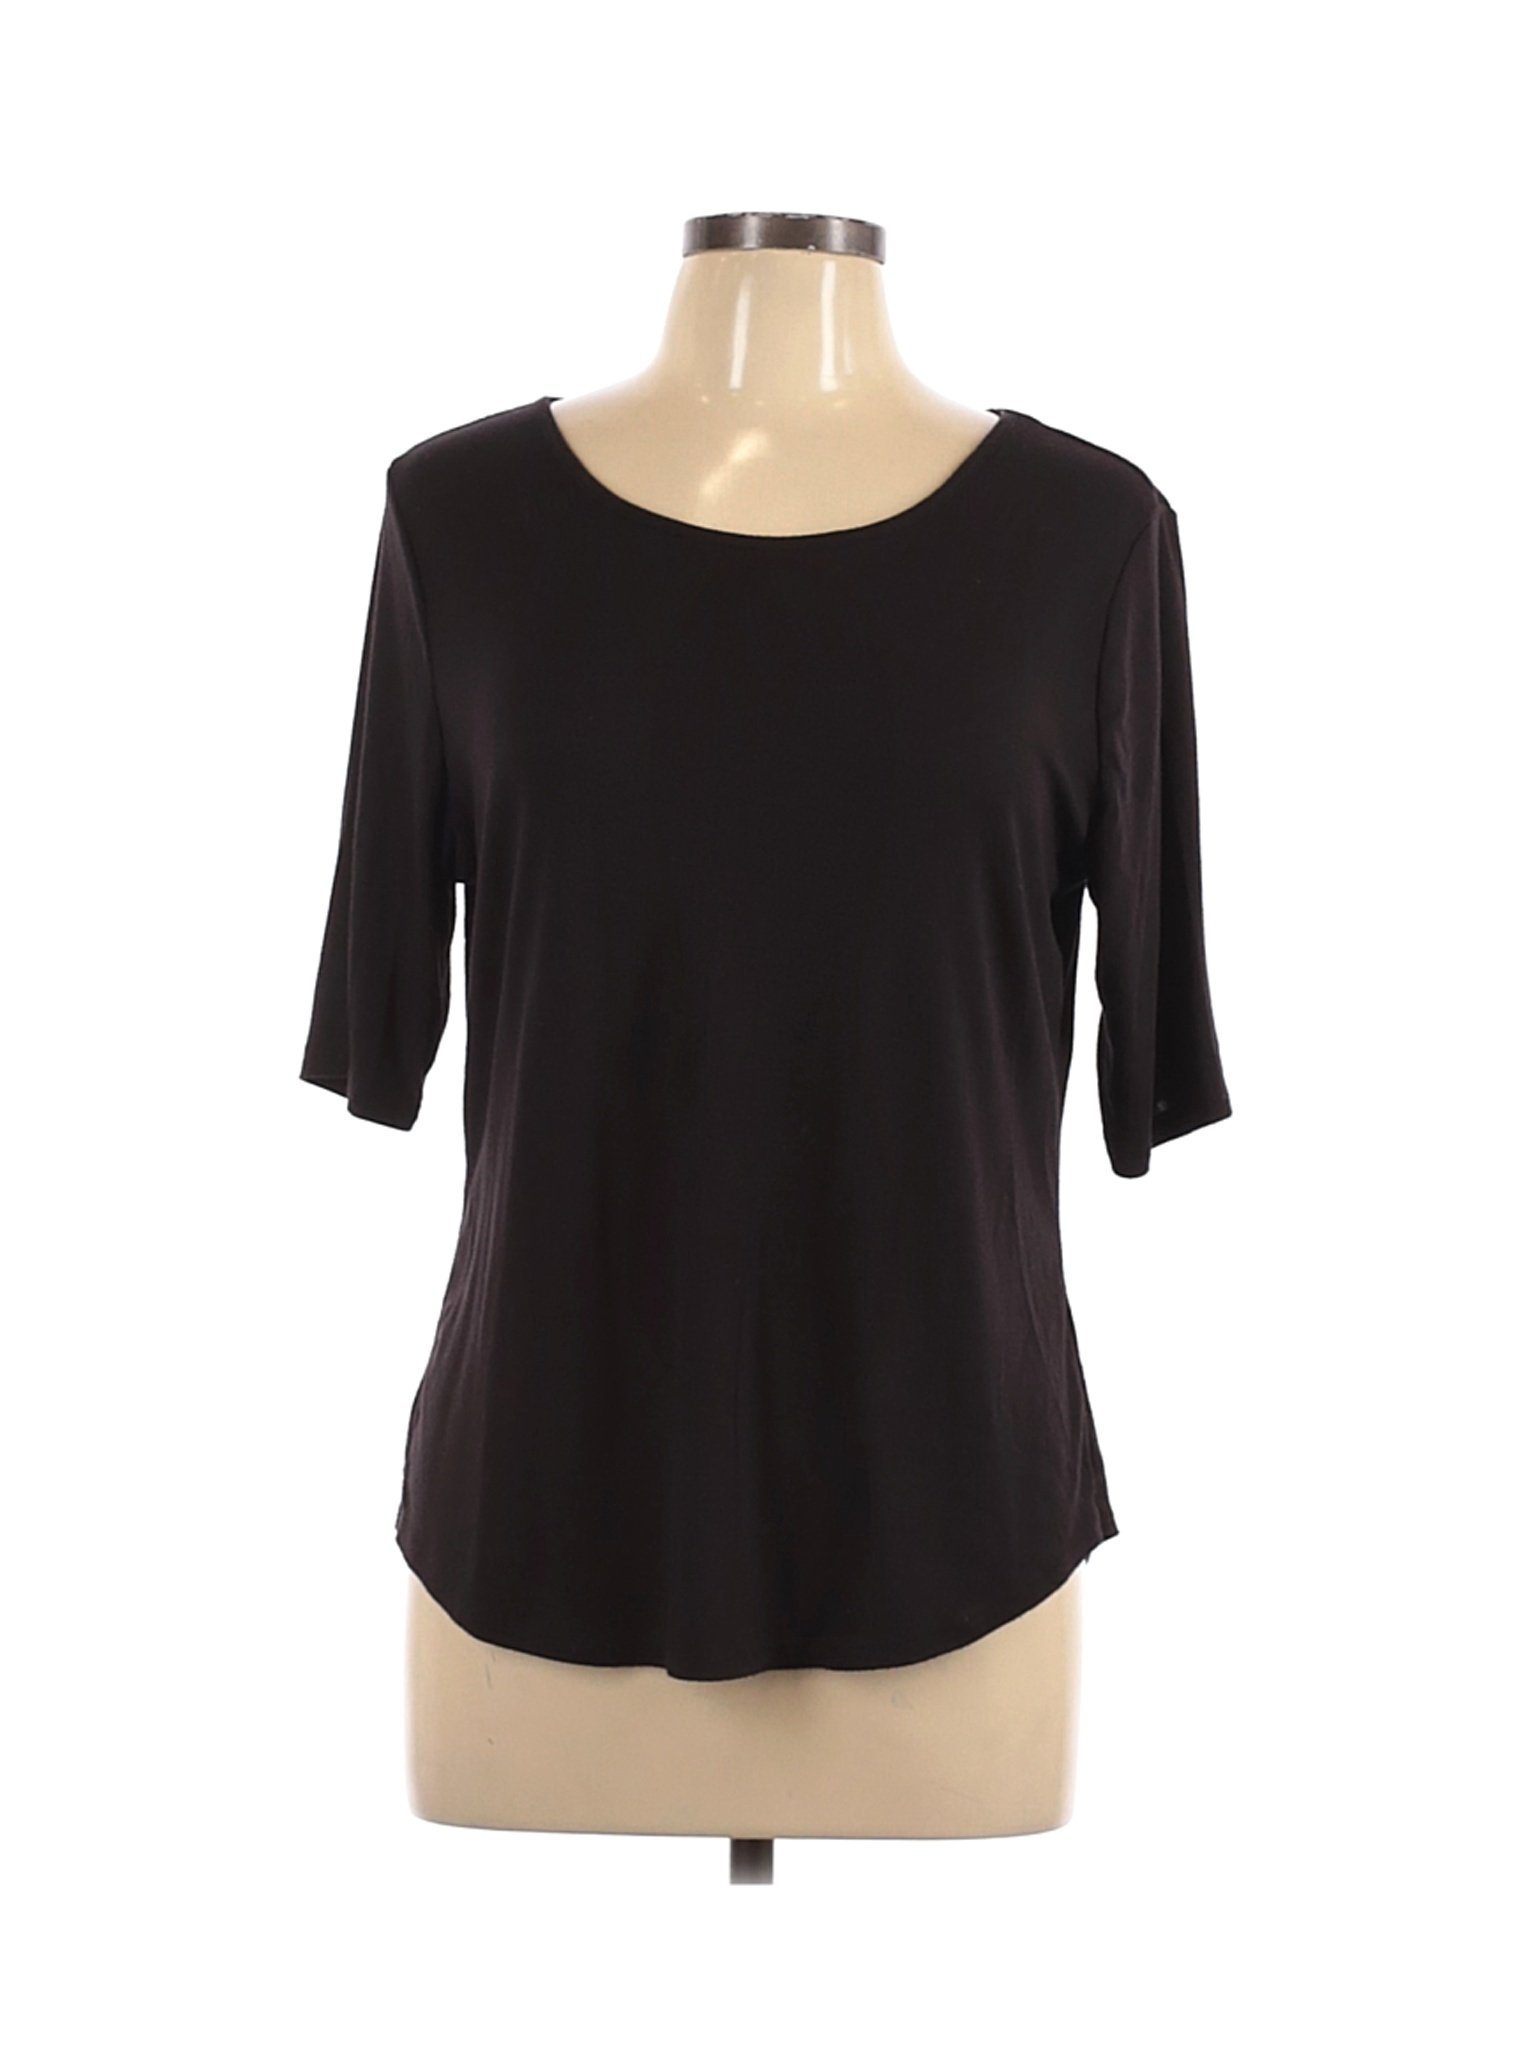 Apt. 9 Women Black Short Sleeve T-Shirt L | eBay